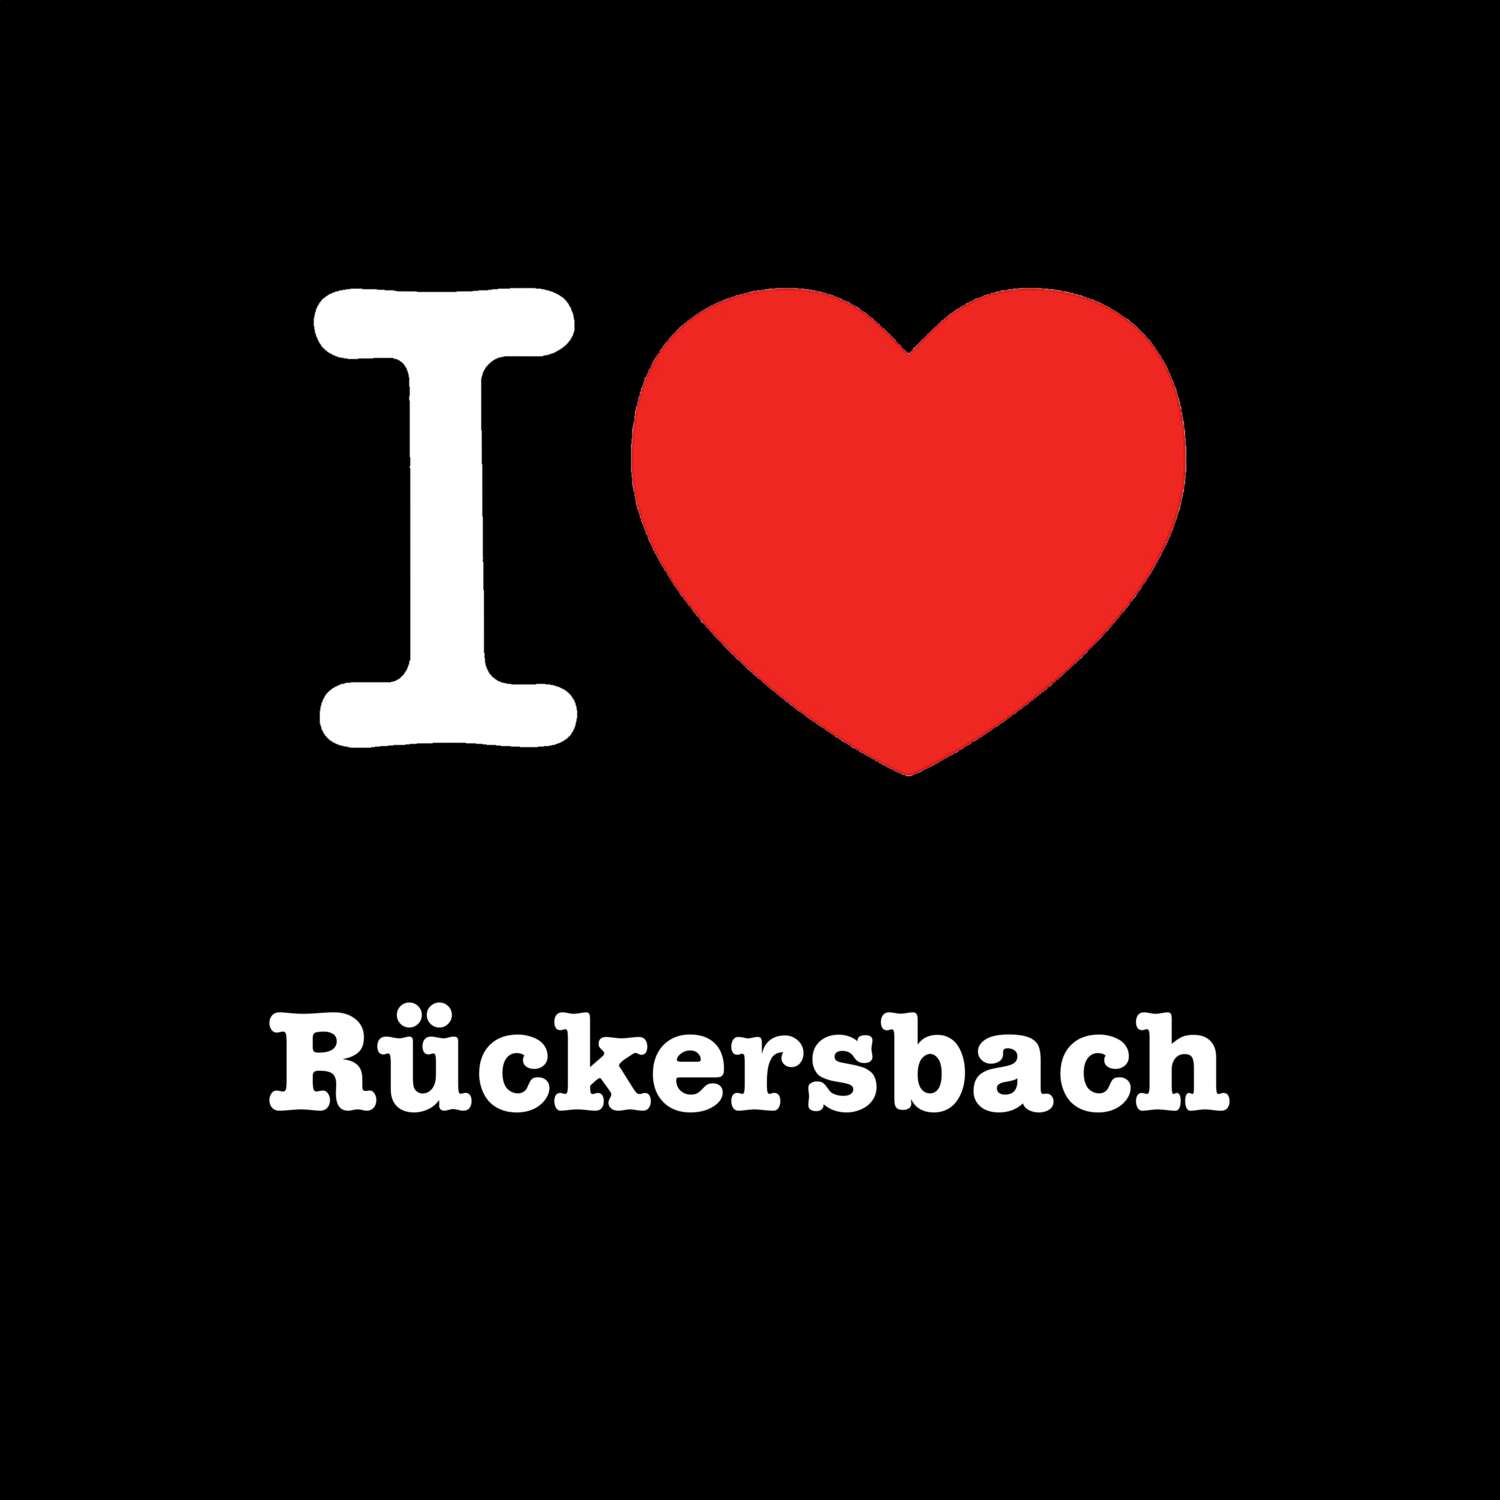 Rückersbach T-Shirt »I love«